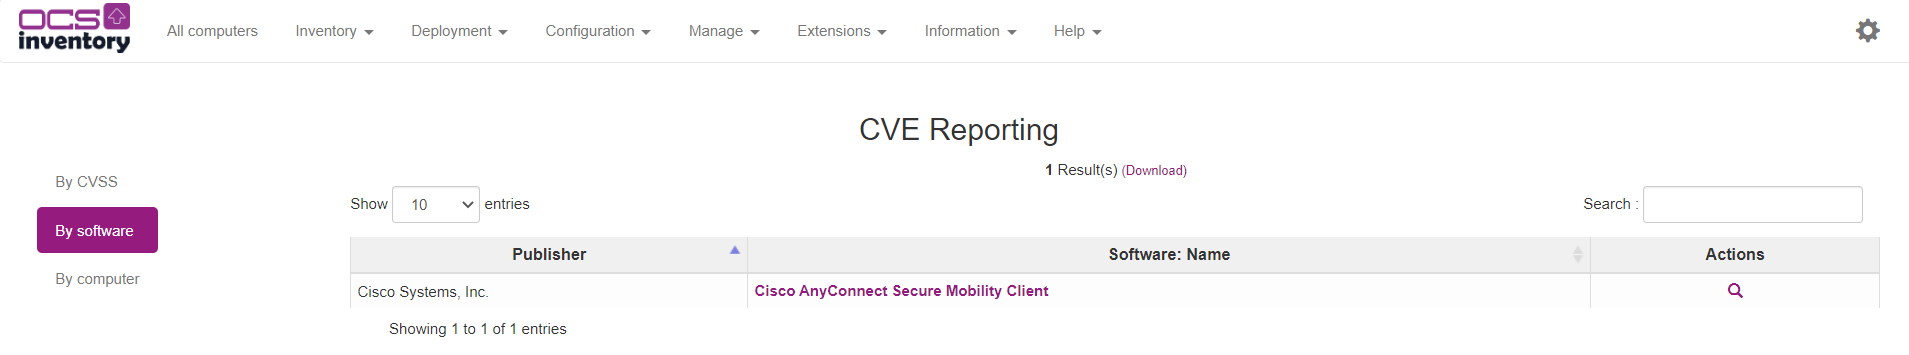 cve-search software